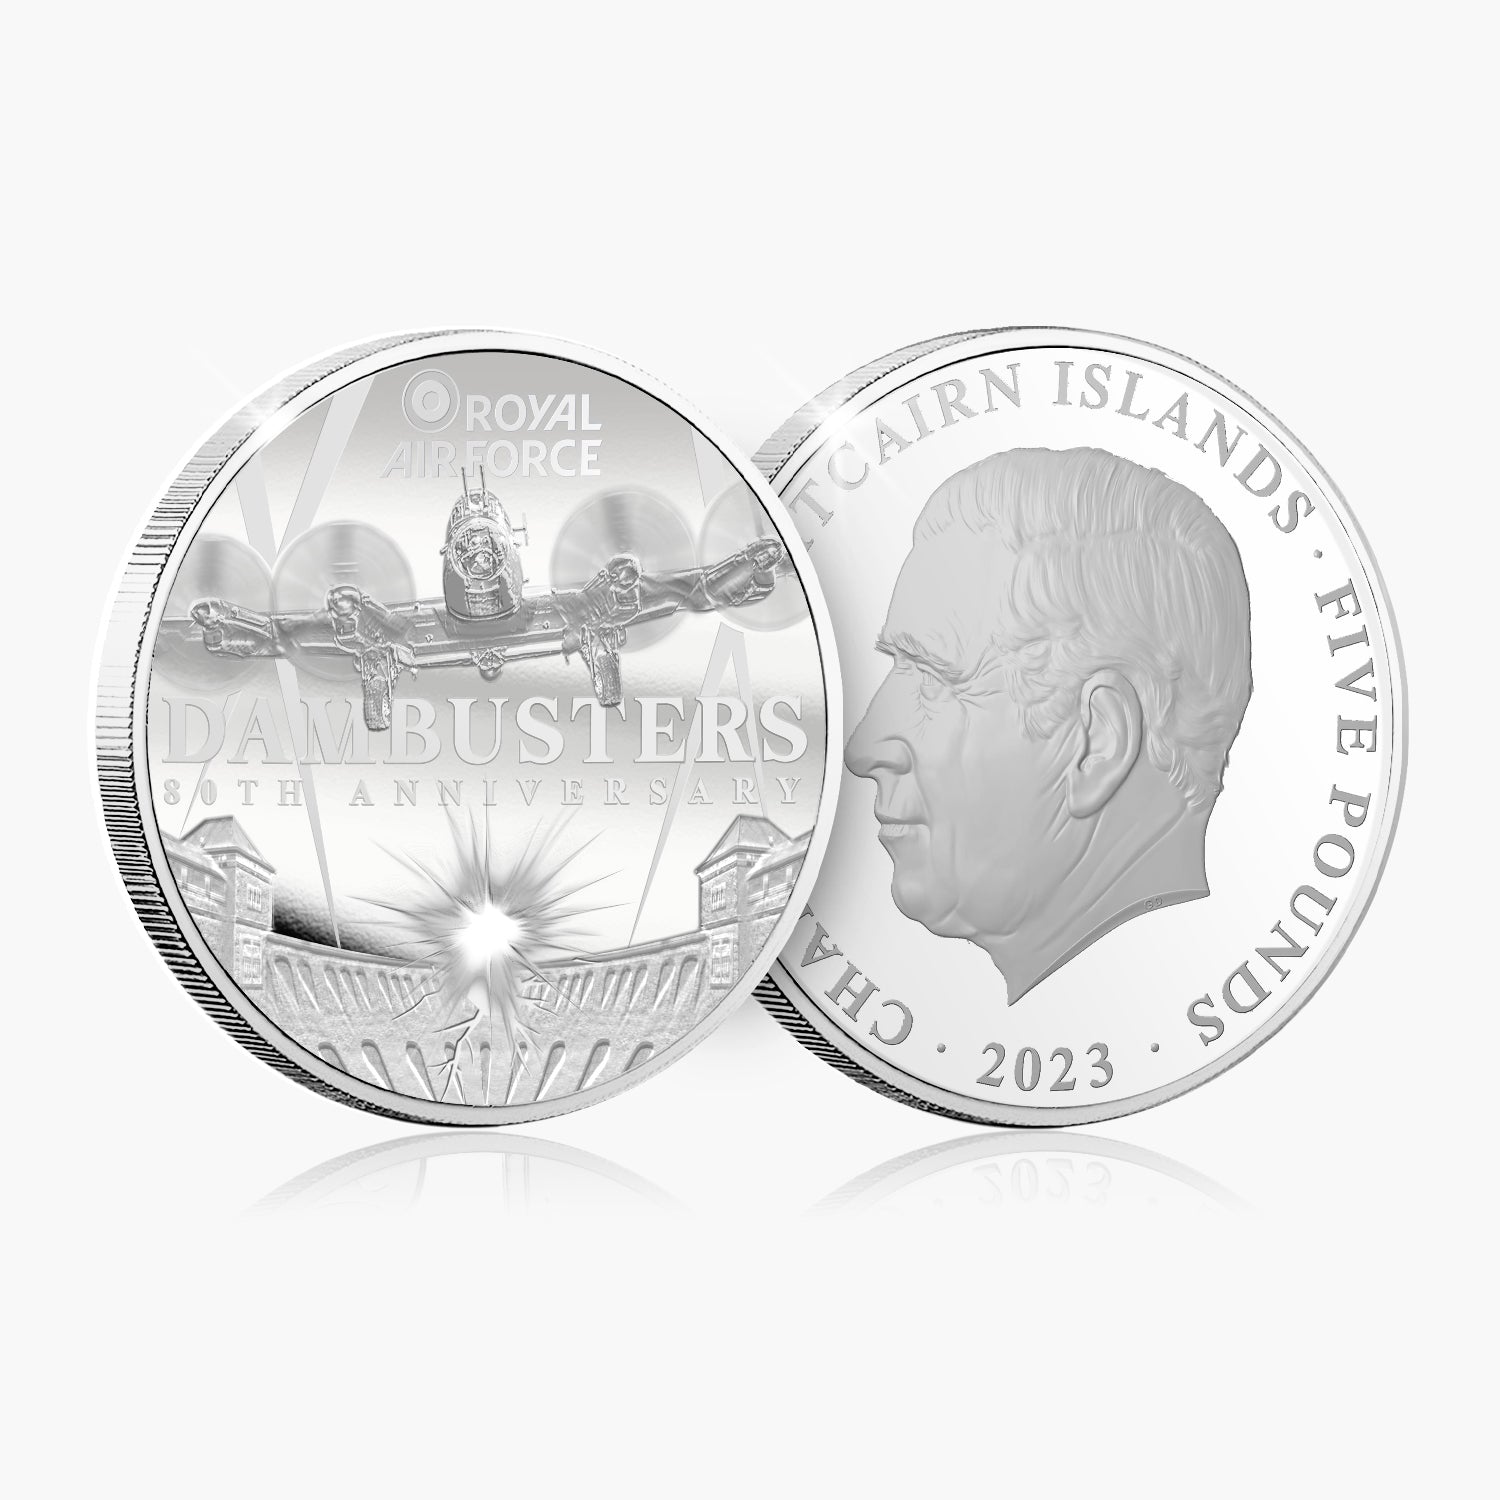 The 2023 Dambusters 80th Anniversary £5 BU Coin